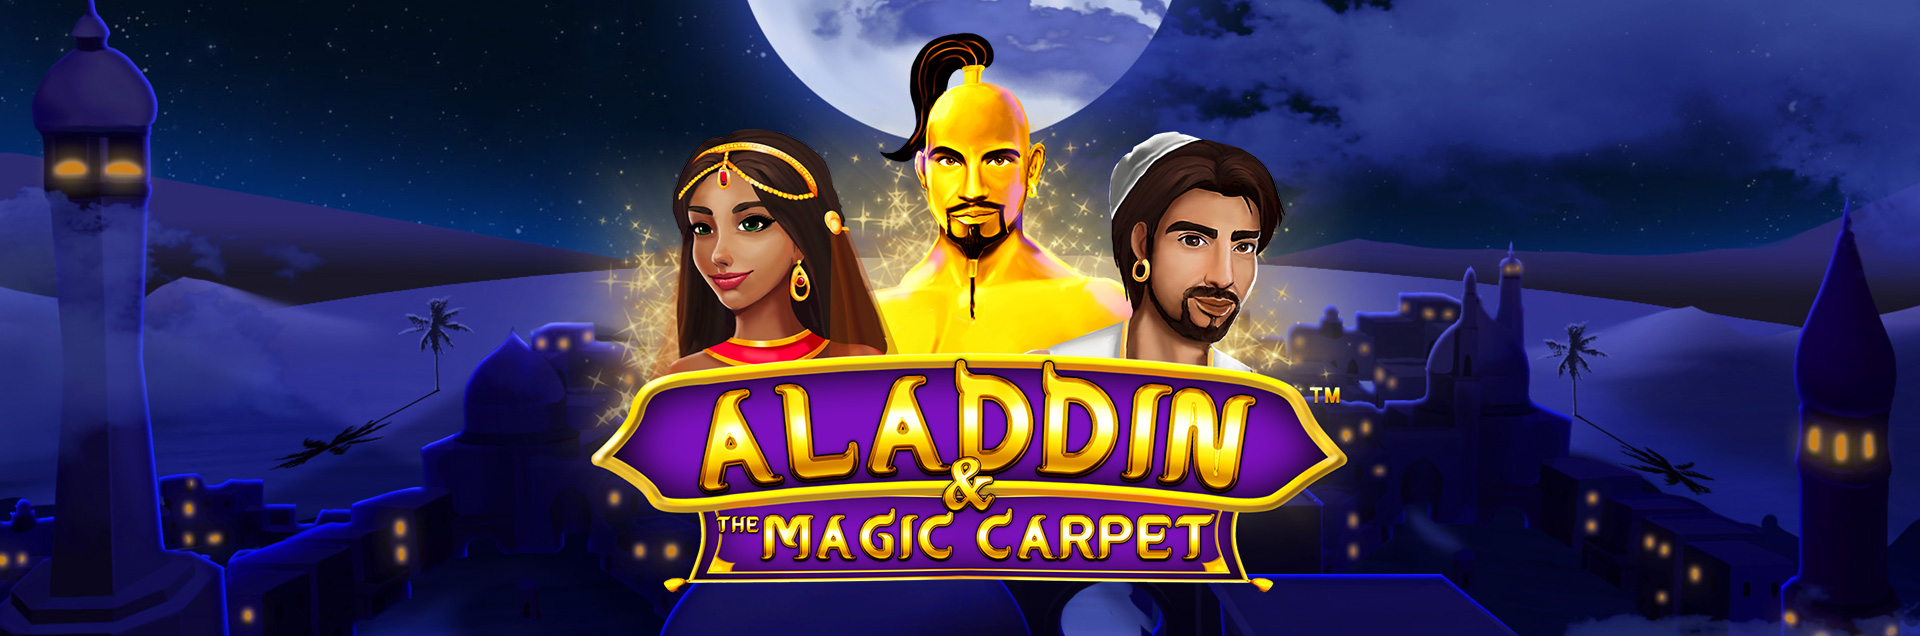 Aladdin and the Magic Carpet header banner